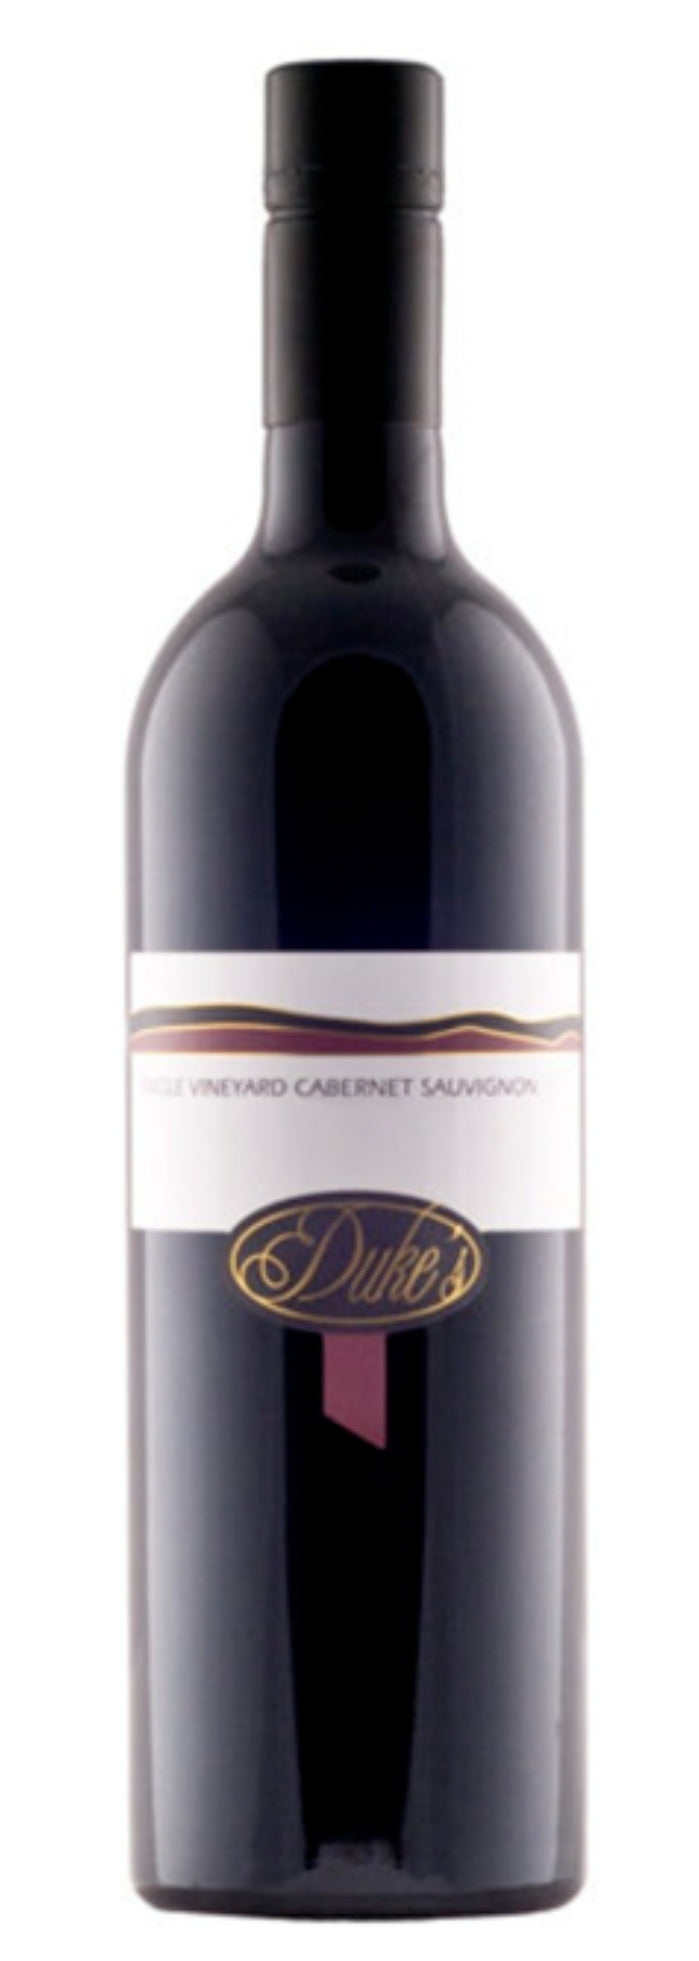 Dukes Single Vineyard Cabernet Sauvignon